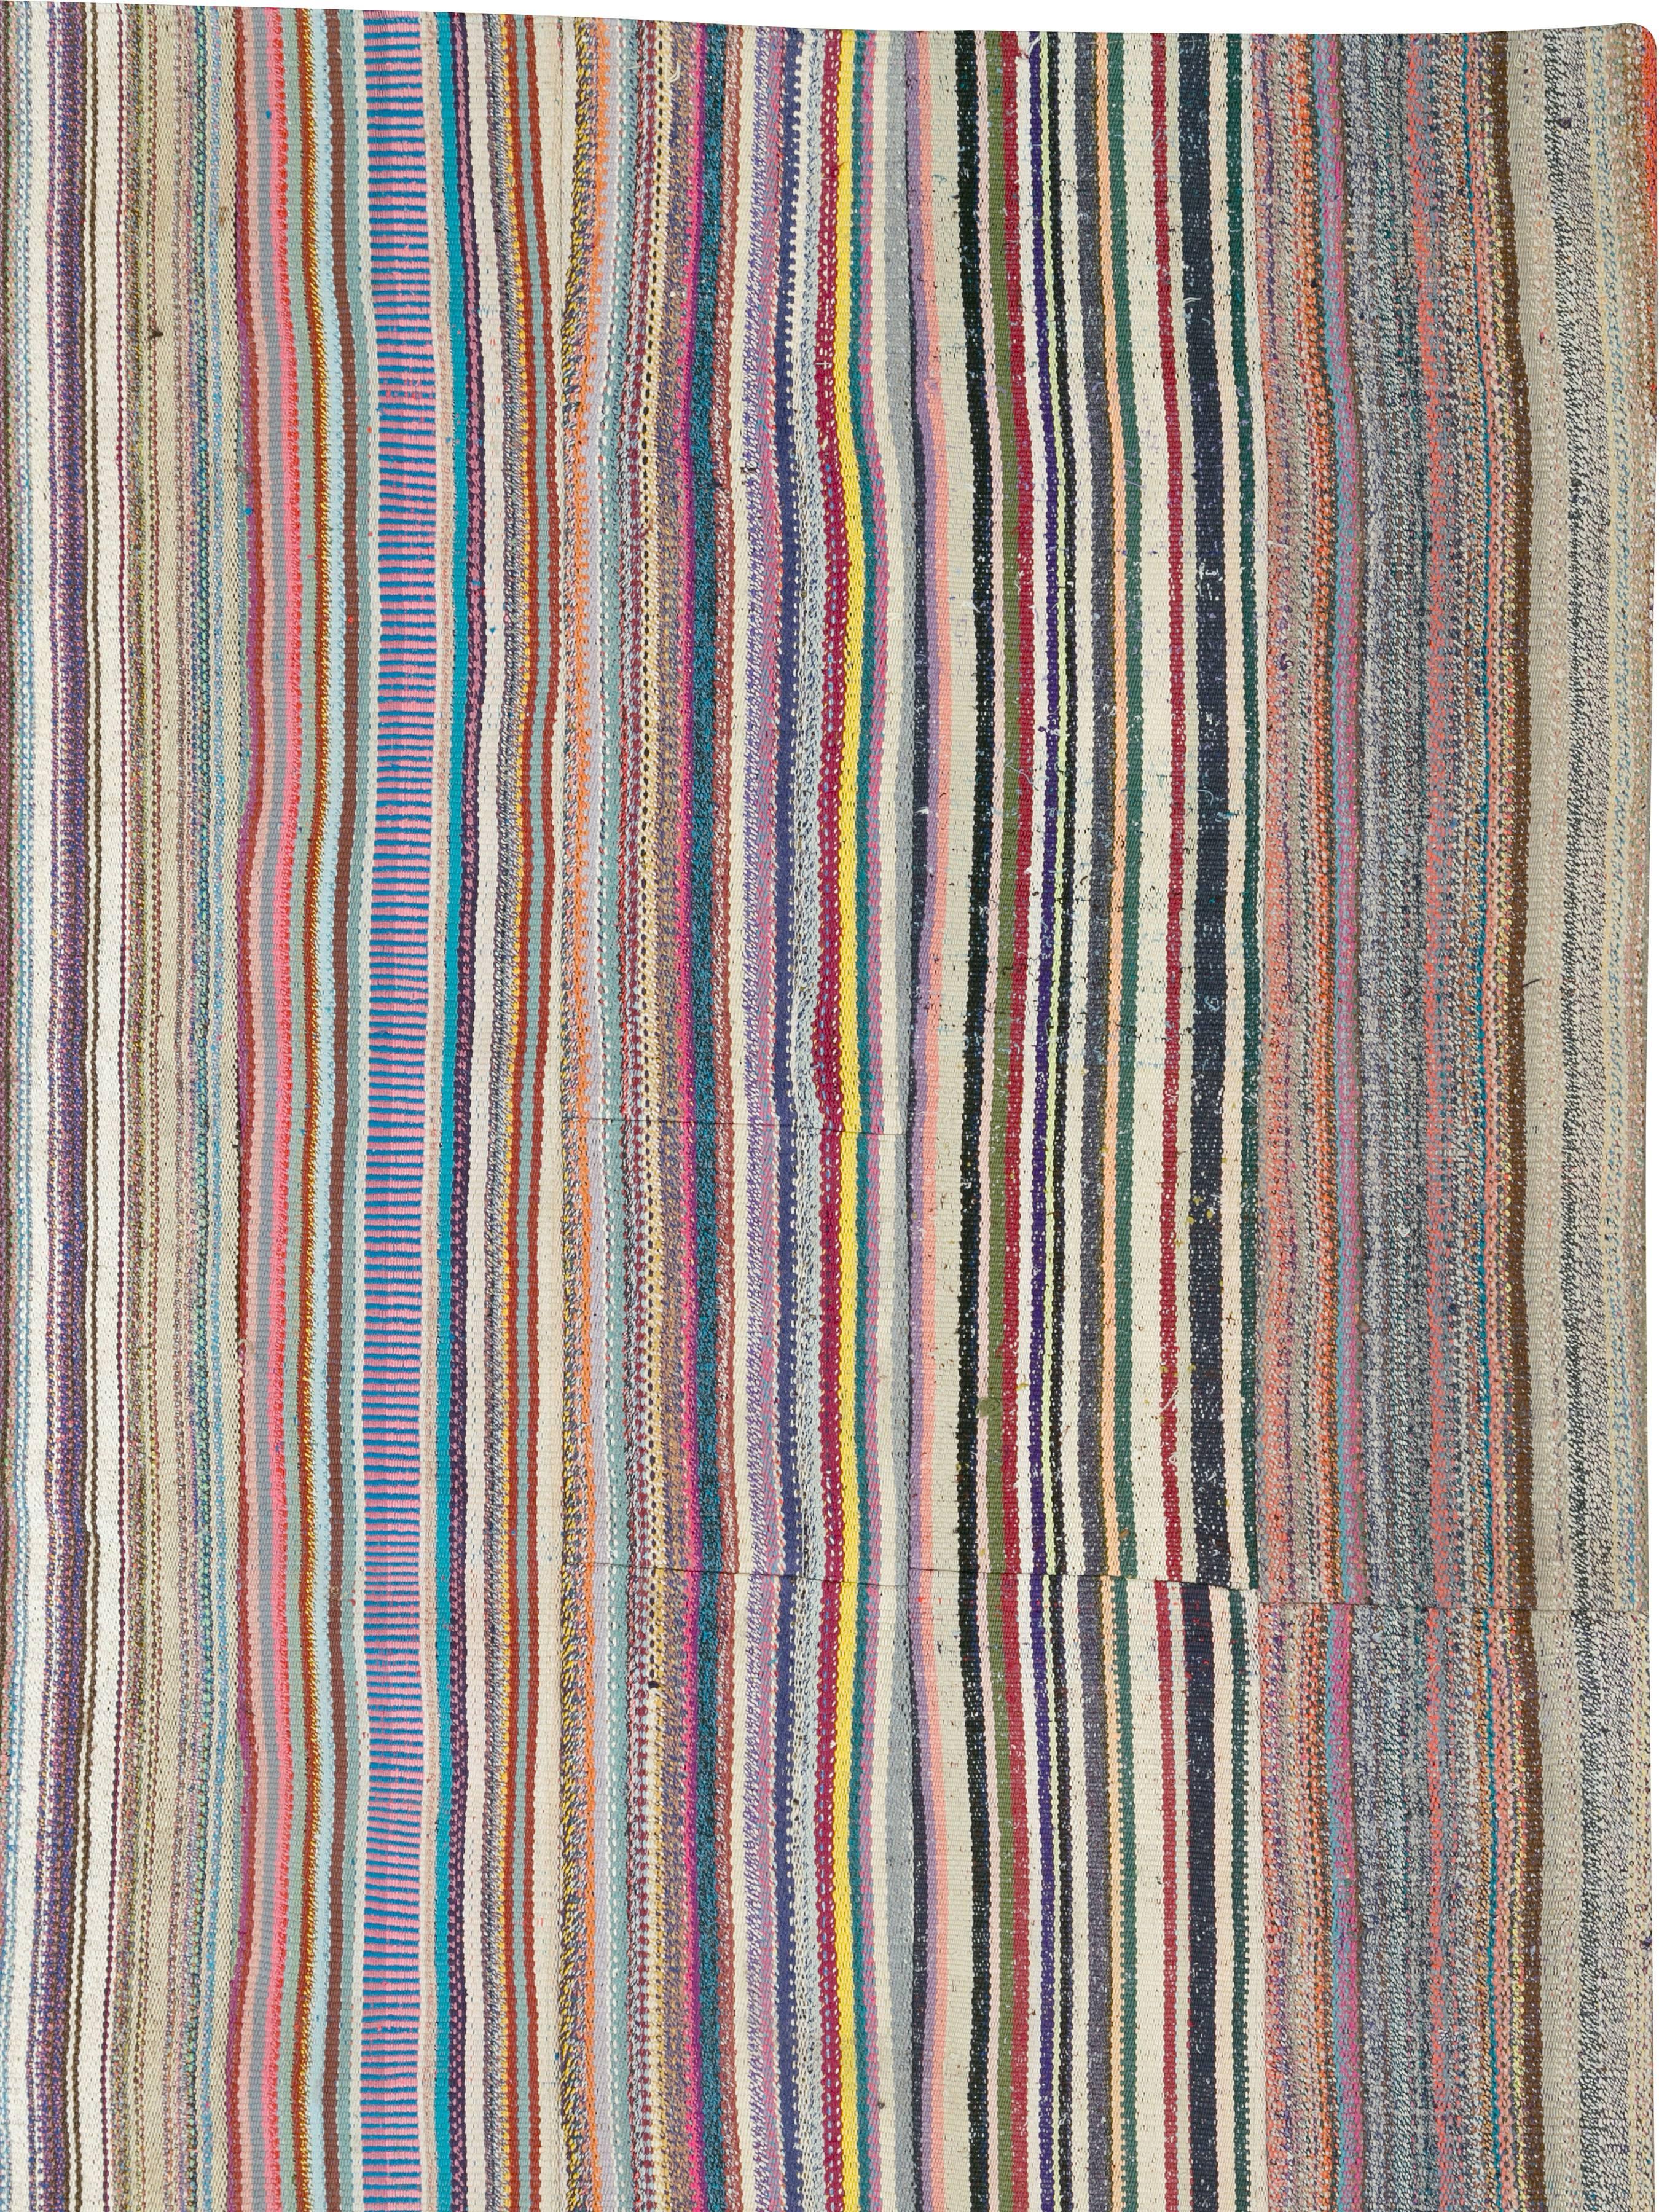 Hand-Woven Vintage Turkish Flat-Weave Rug